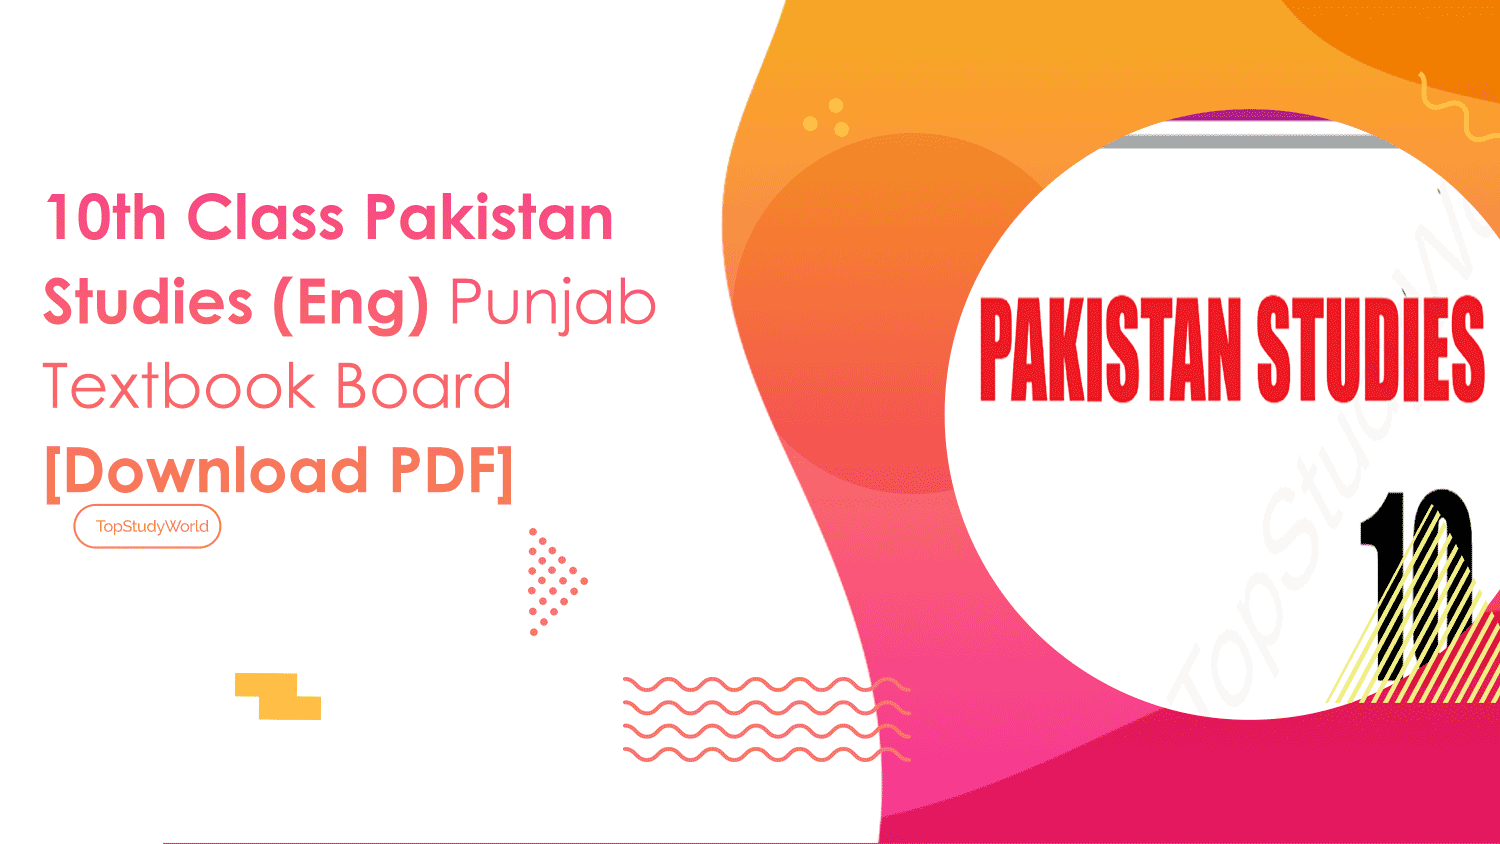 10th Class Pakistan Studies (Eng) Punjab Textbook Board [Download PDF]